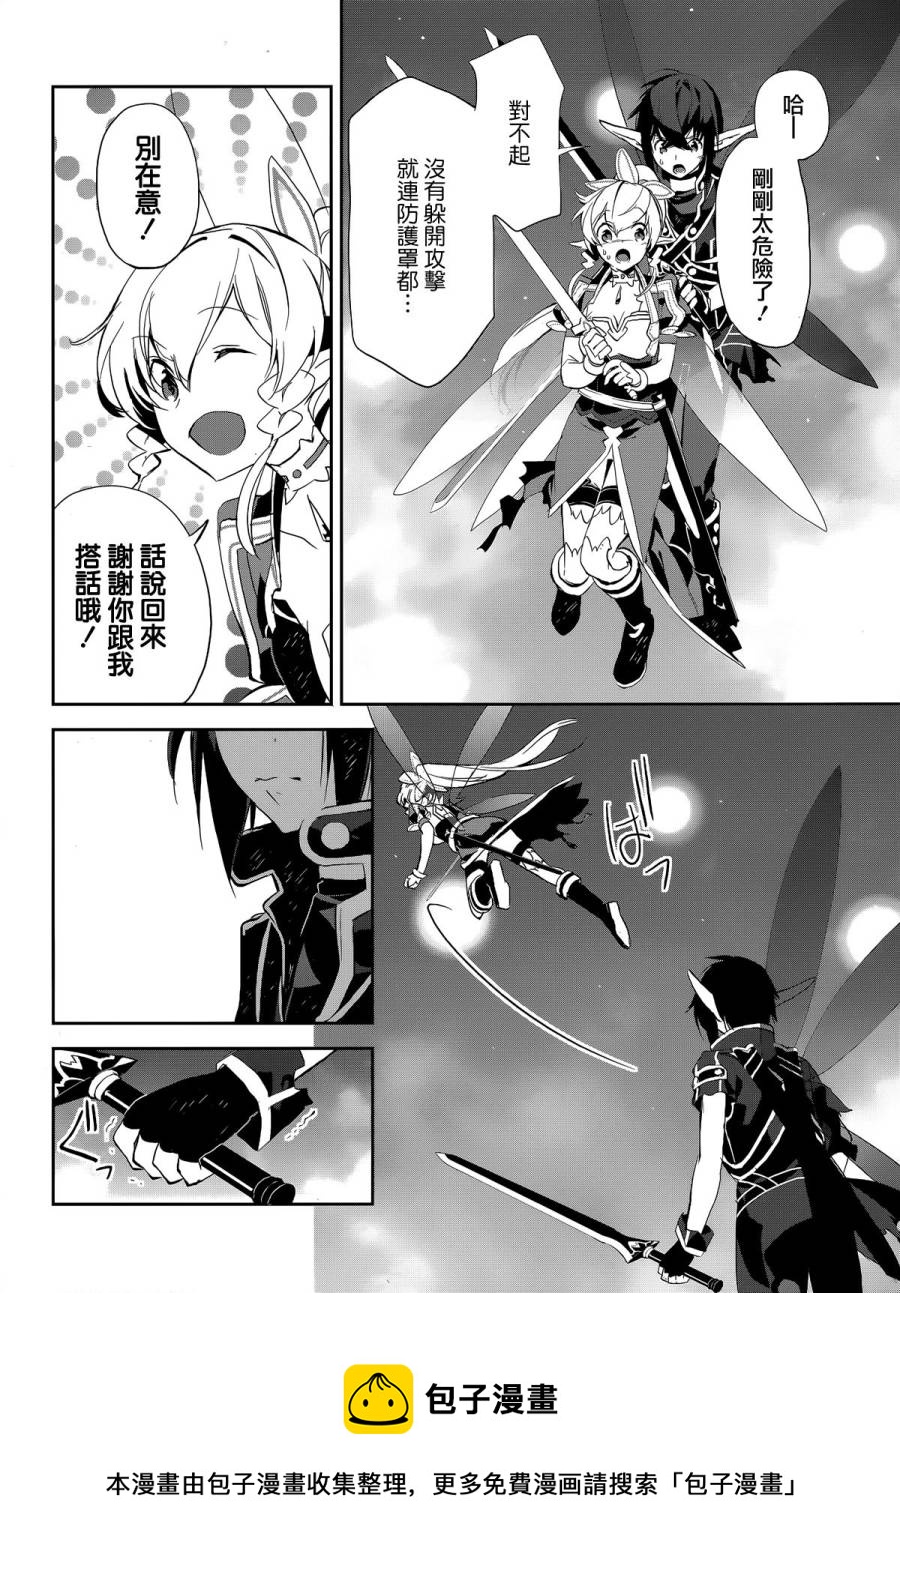 Sword Art Online少女們的樂章 - 第05話 - 3